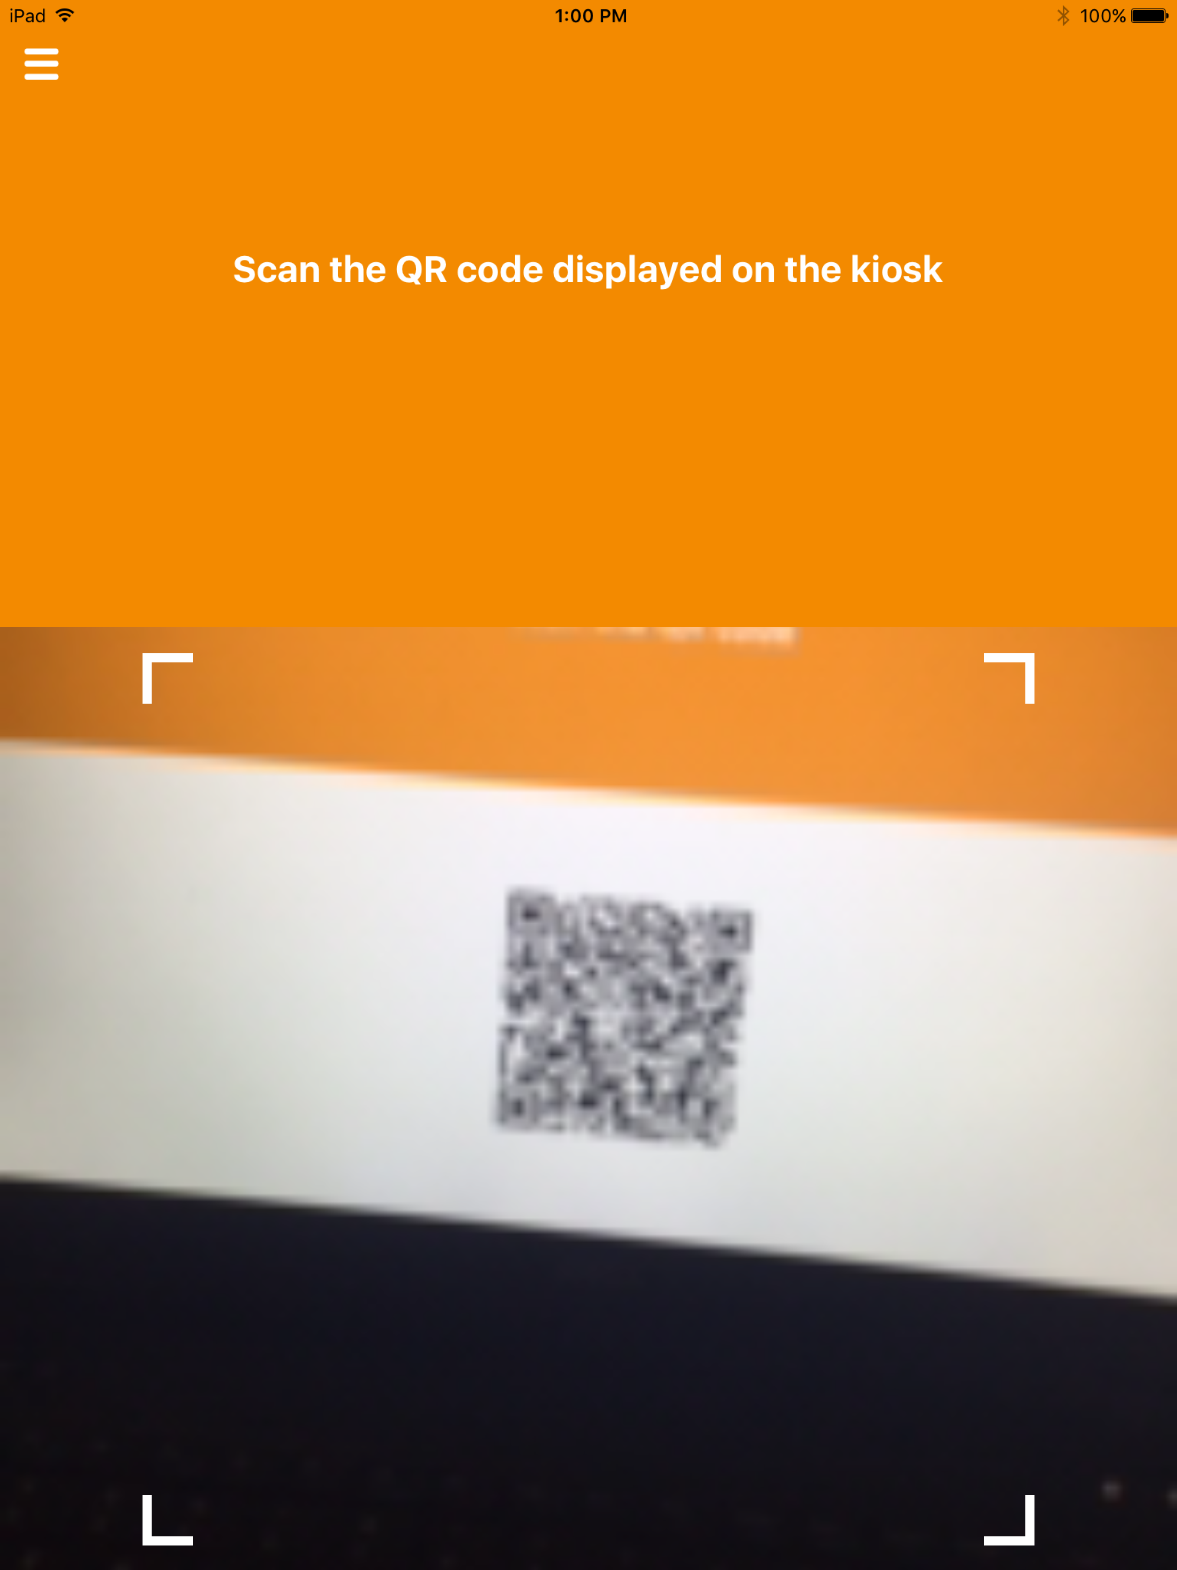 A screenshot of a device camera capturing the QR code.